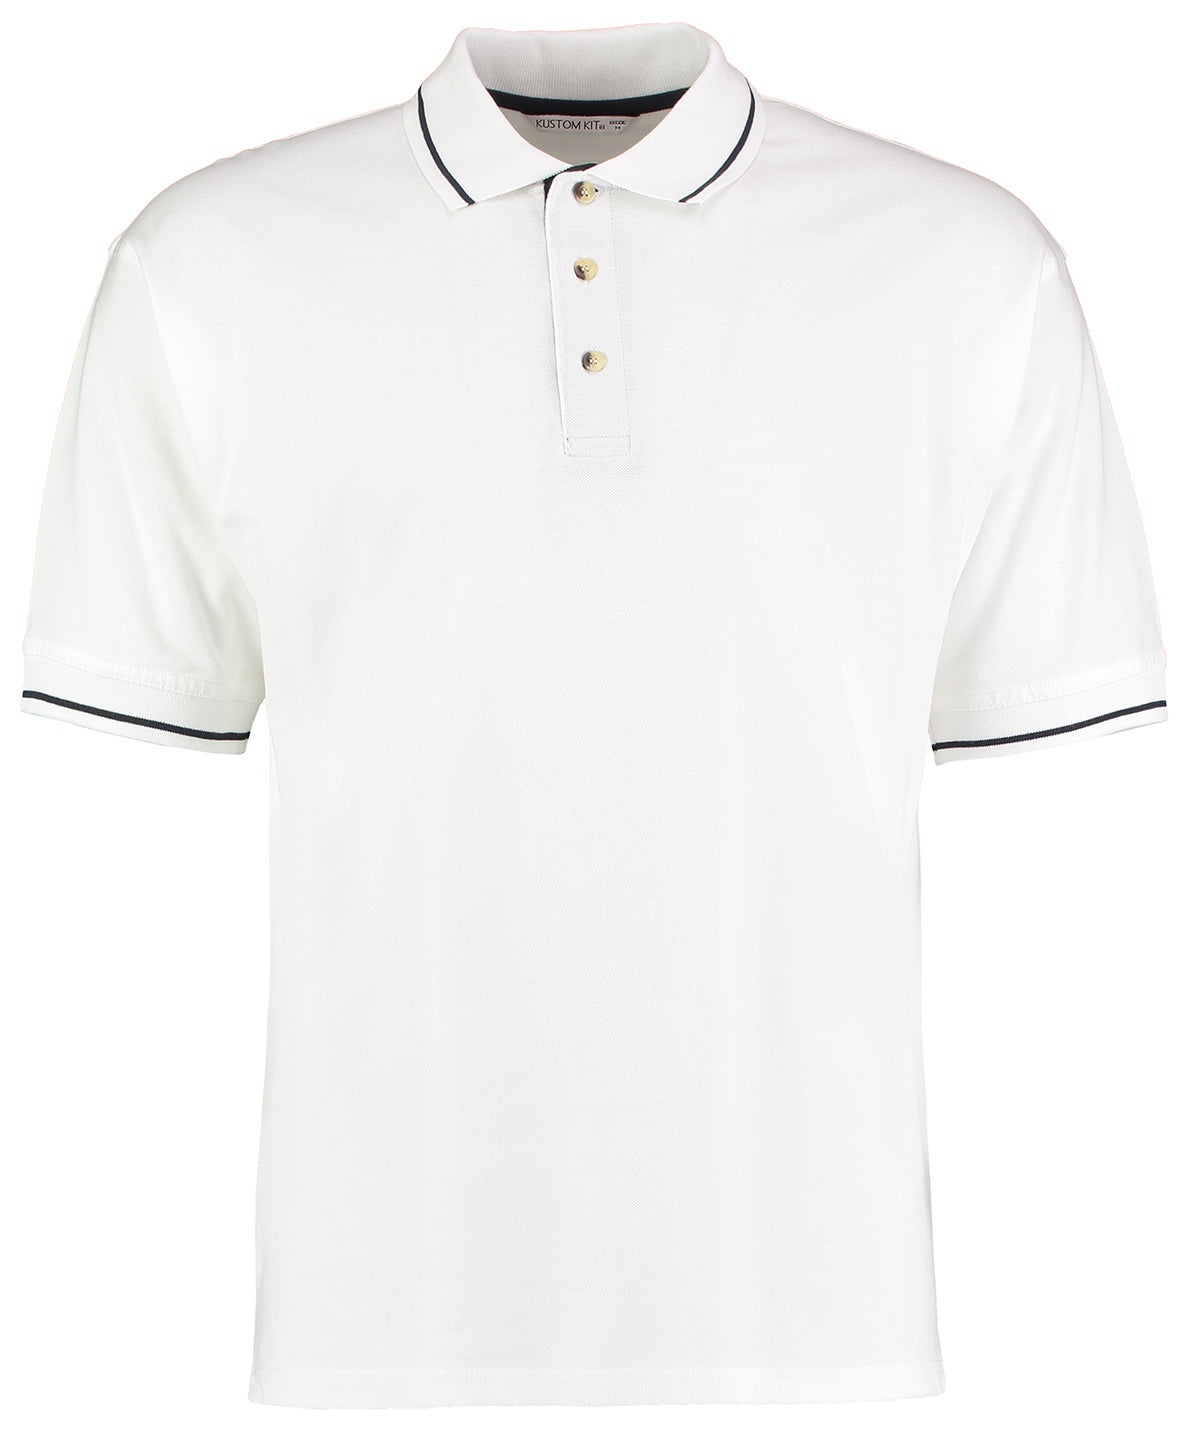 Personalised Polo Shirts - Black Kustom Kit St Mellion polo (classic fit)